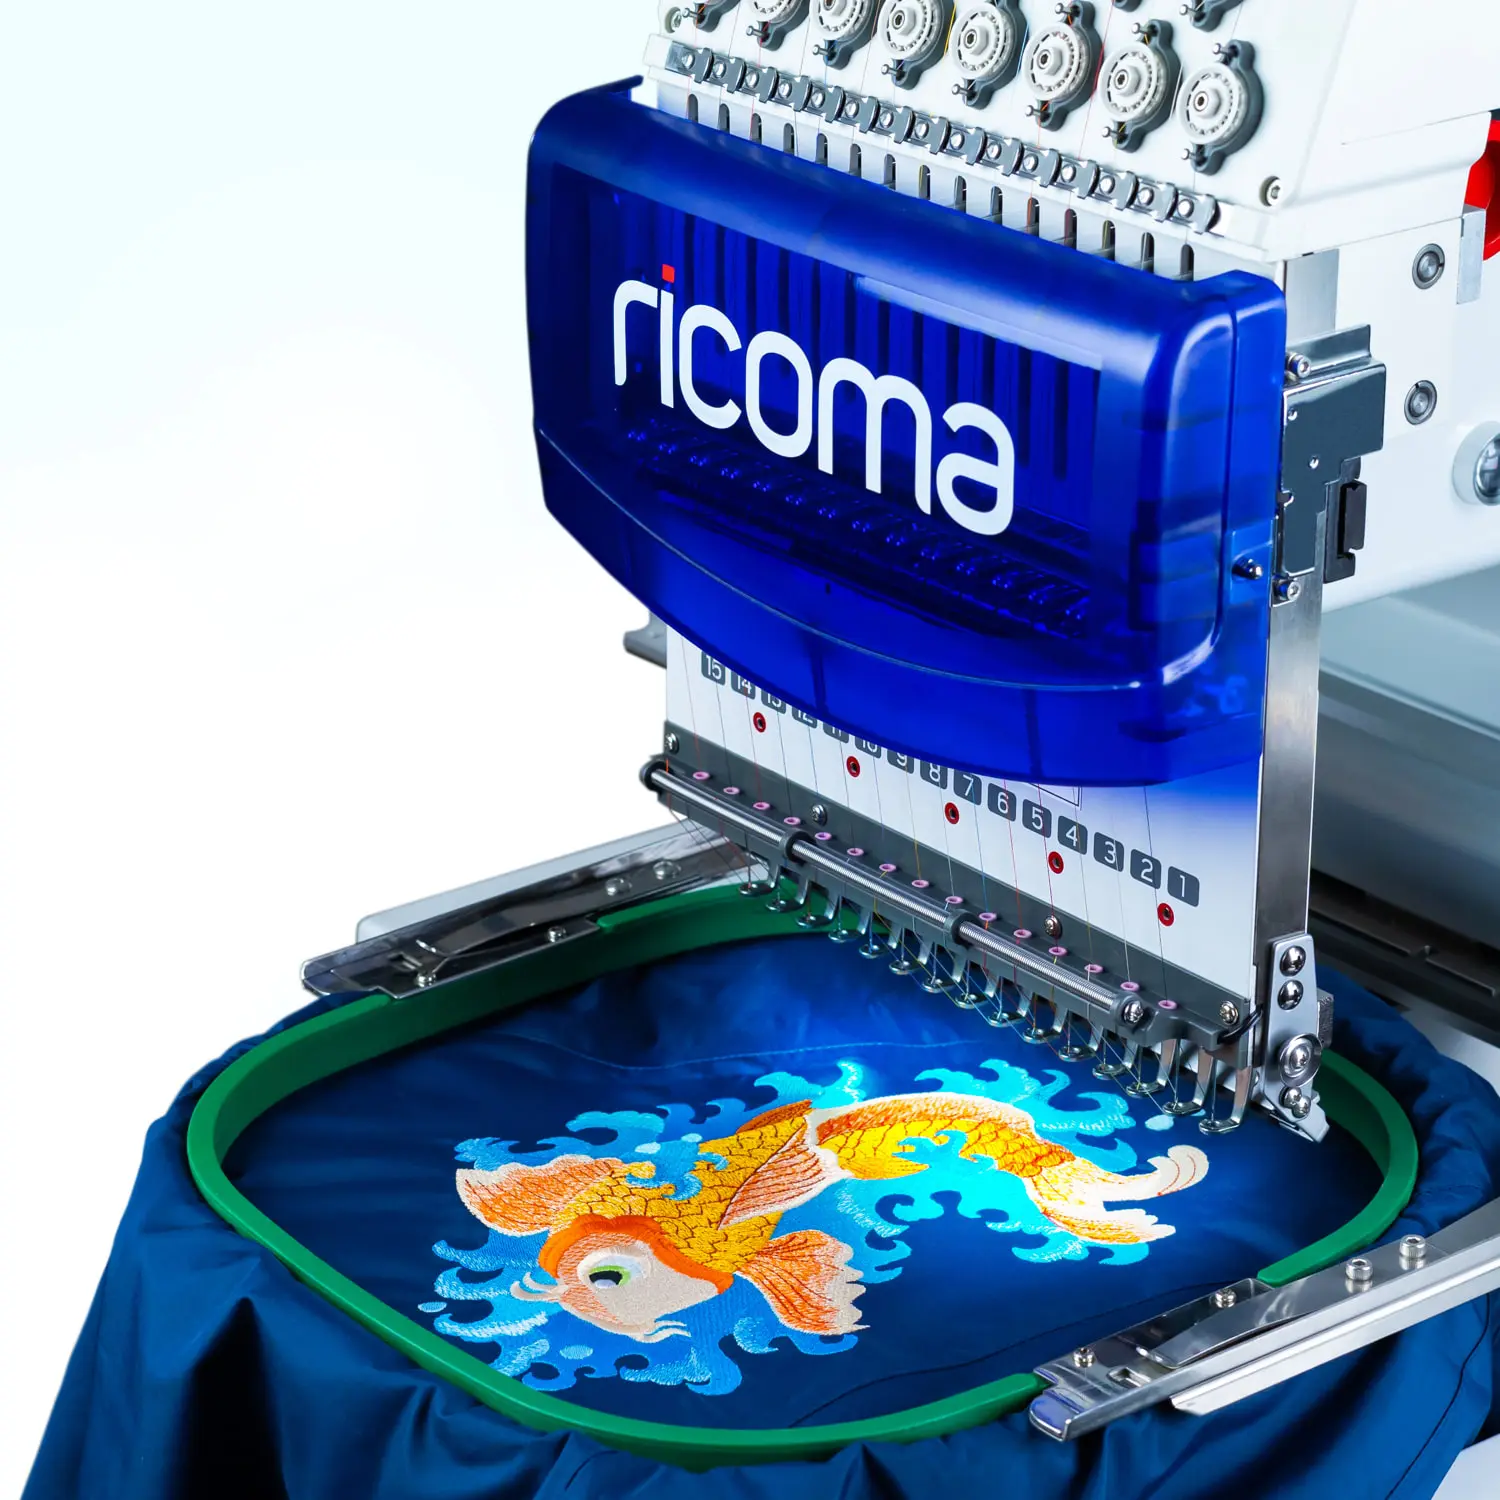 Ricoma TC 1501 Embroidery Machine Review